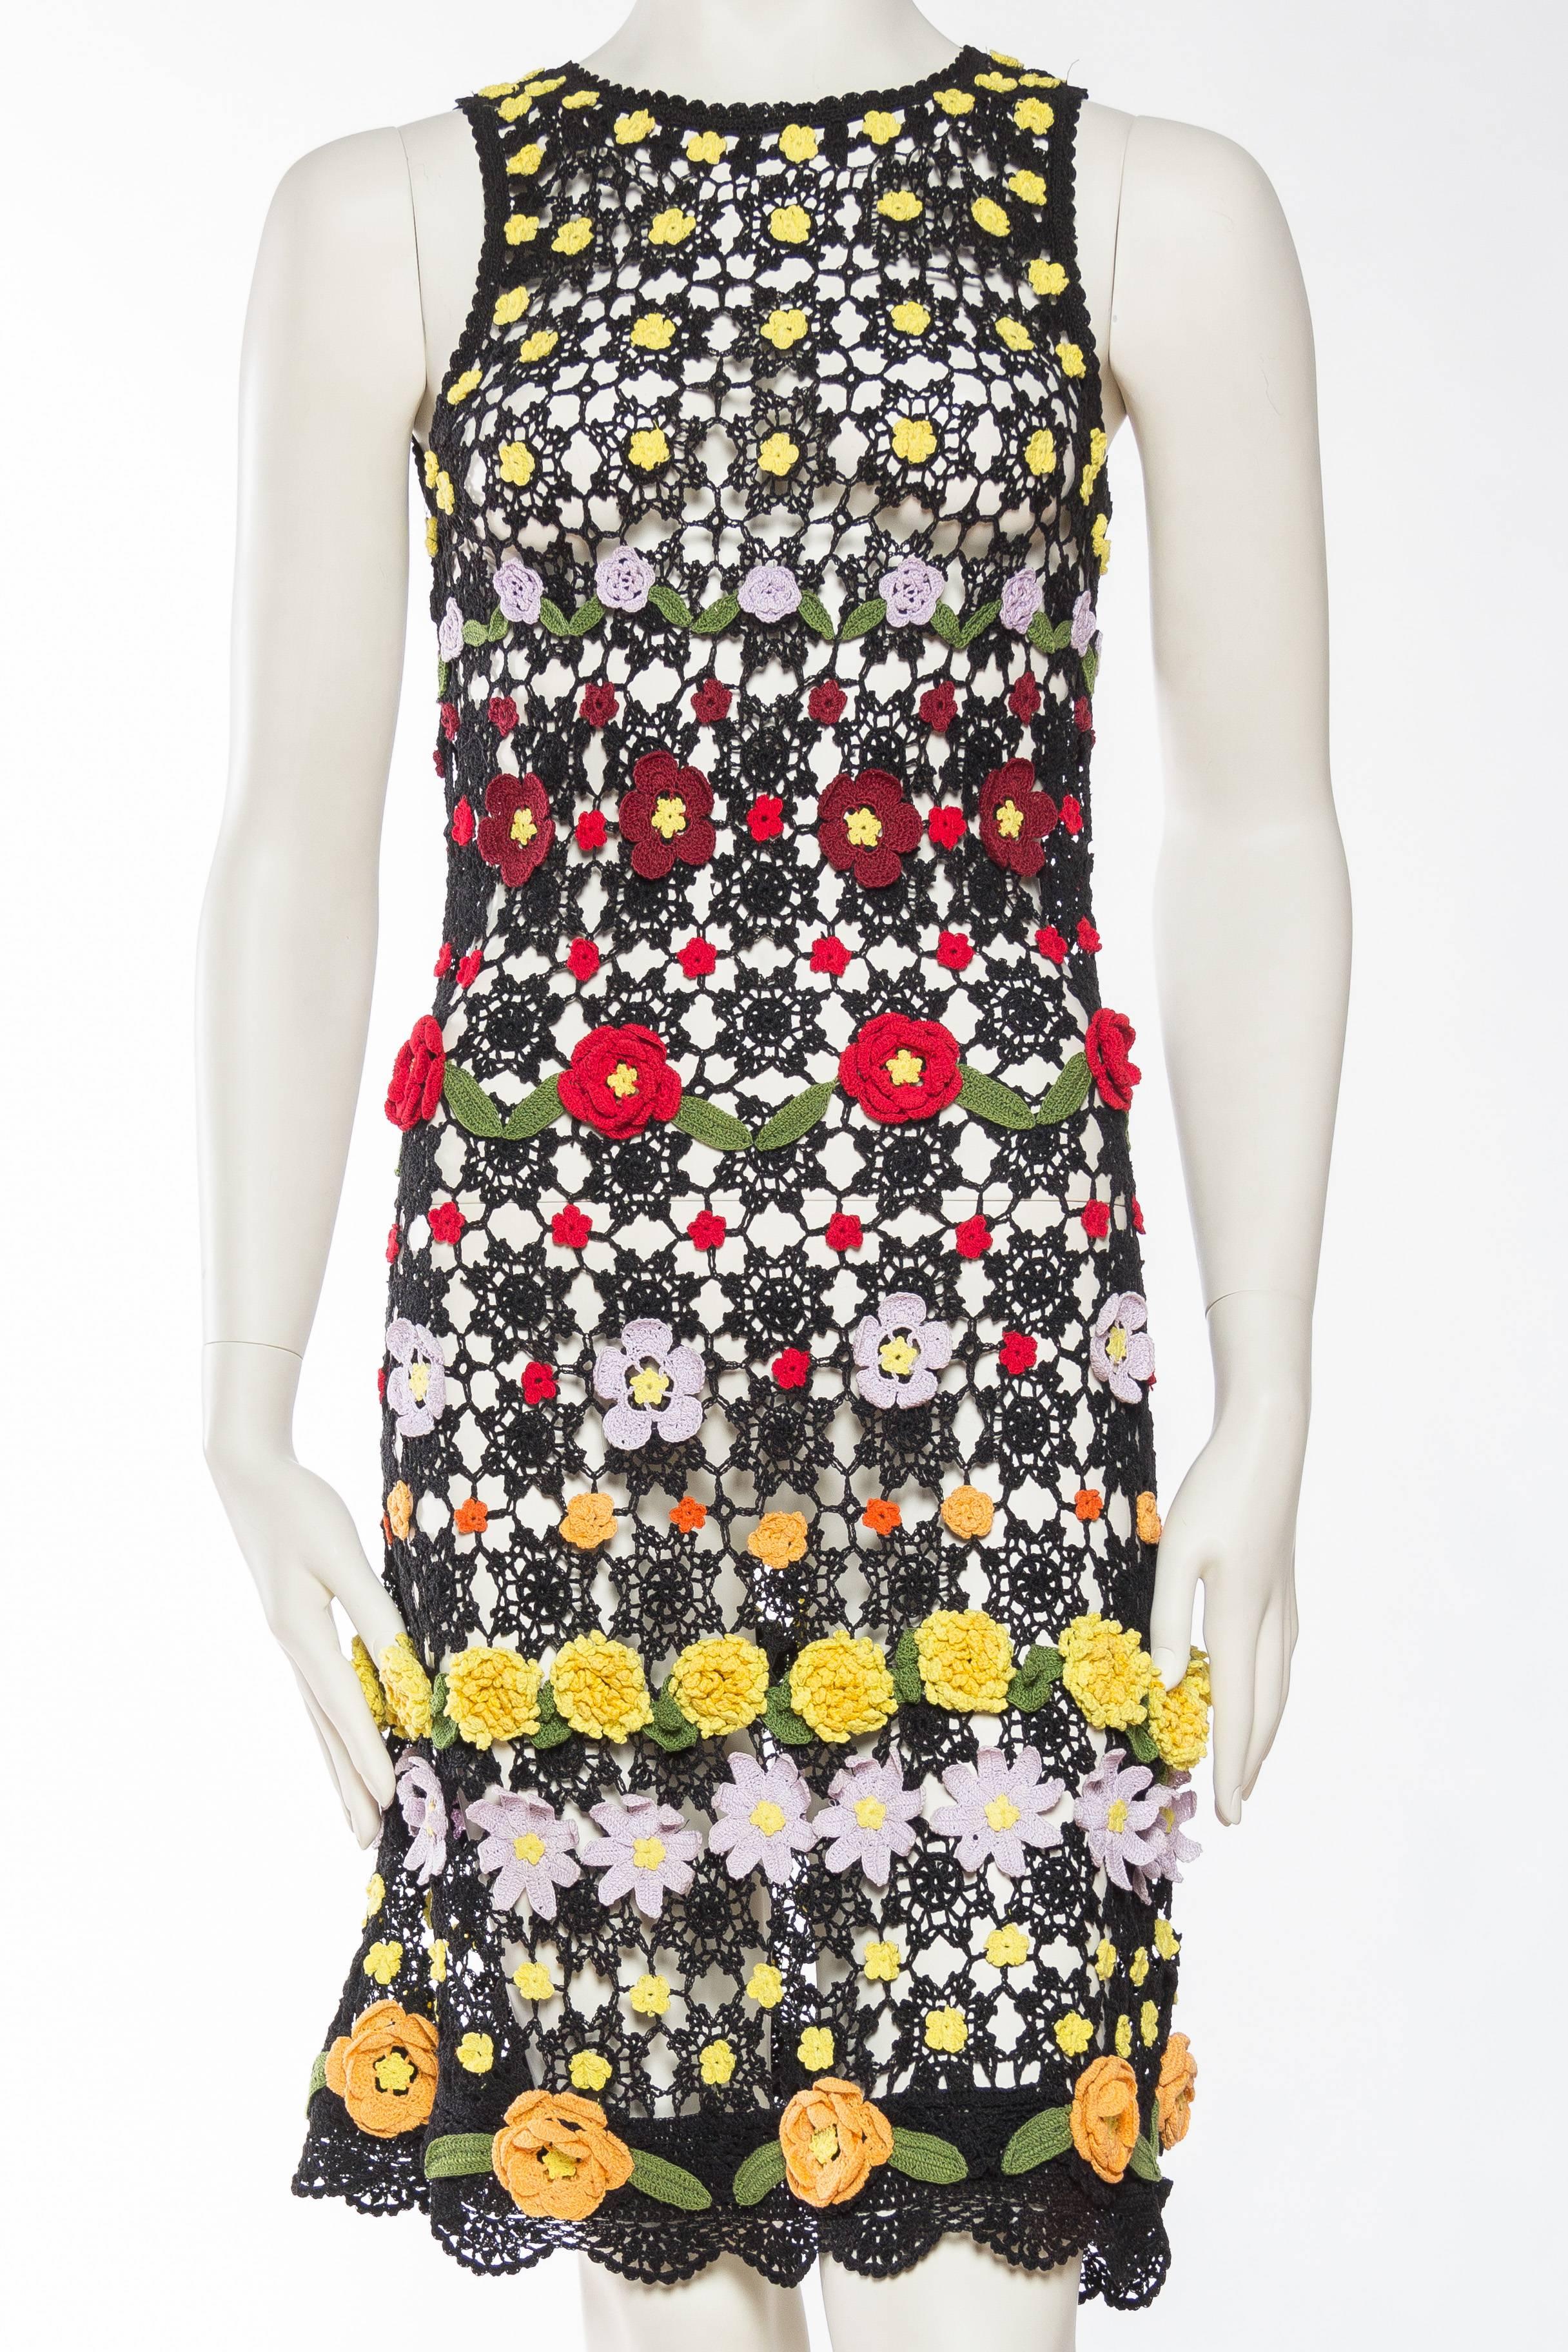 Beige Super Cute Floral Crochet Dress